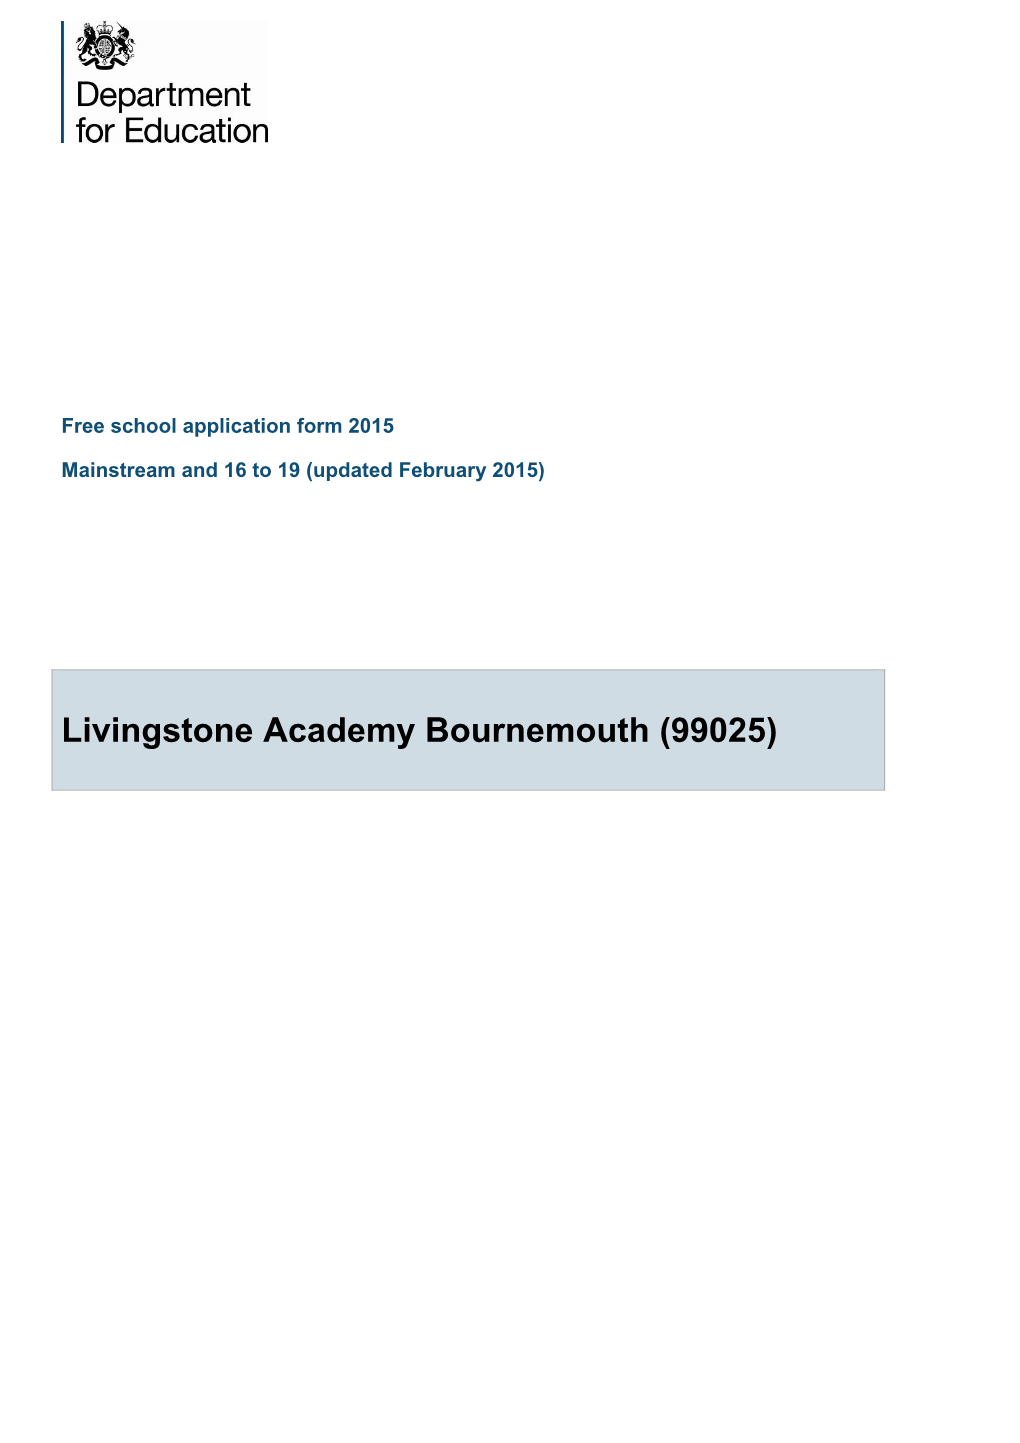 Livingstone Academy Bournemouth (99025)